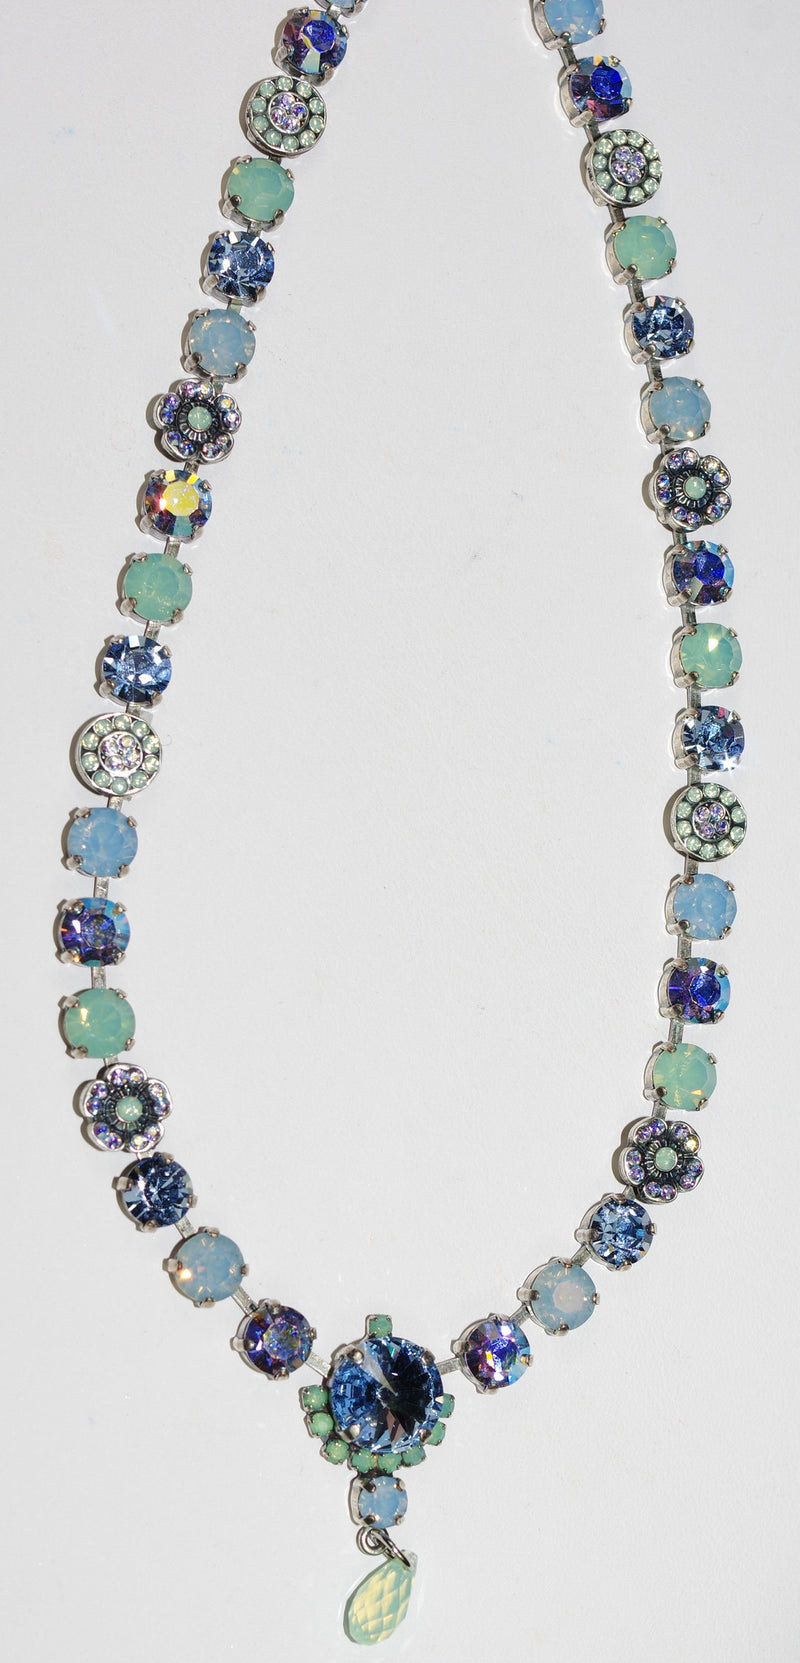 MARIANA NECKLACE DAIQUIRI: blue, pacific opal stones in 1.5 pendant, silver setting, 22" adjustable chain